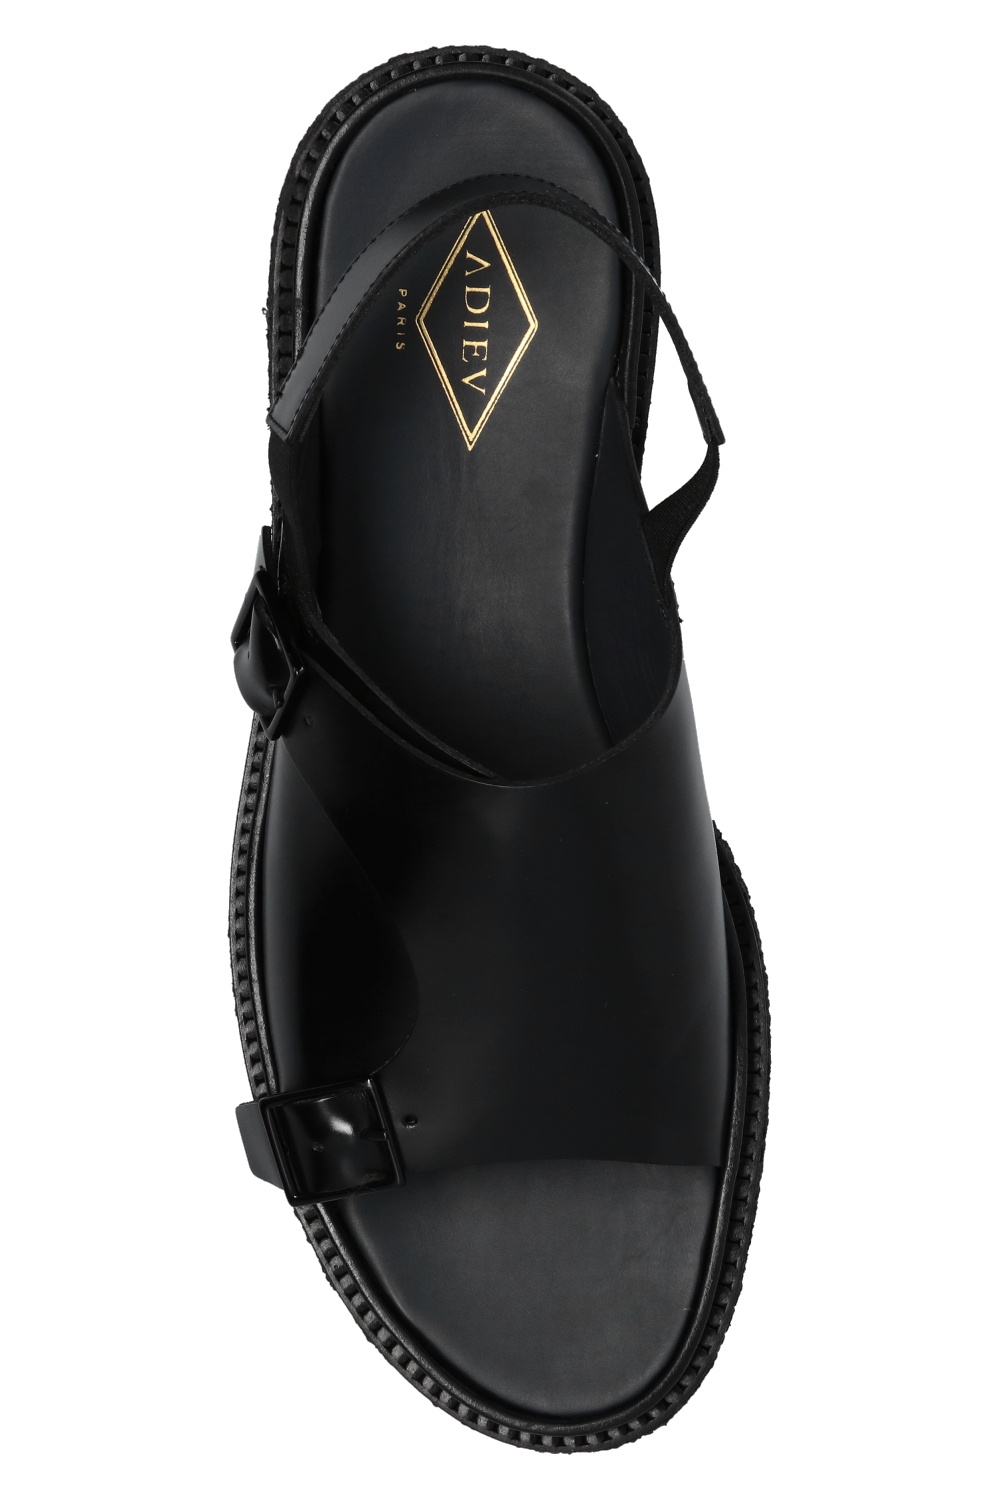 Adieu Paris ‘Type 140’ leather sandals